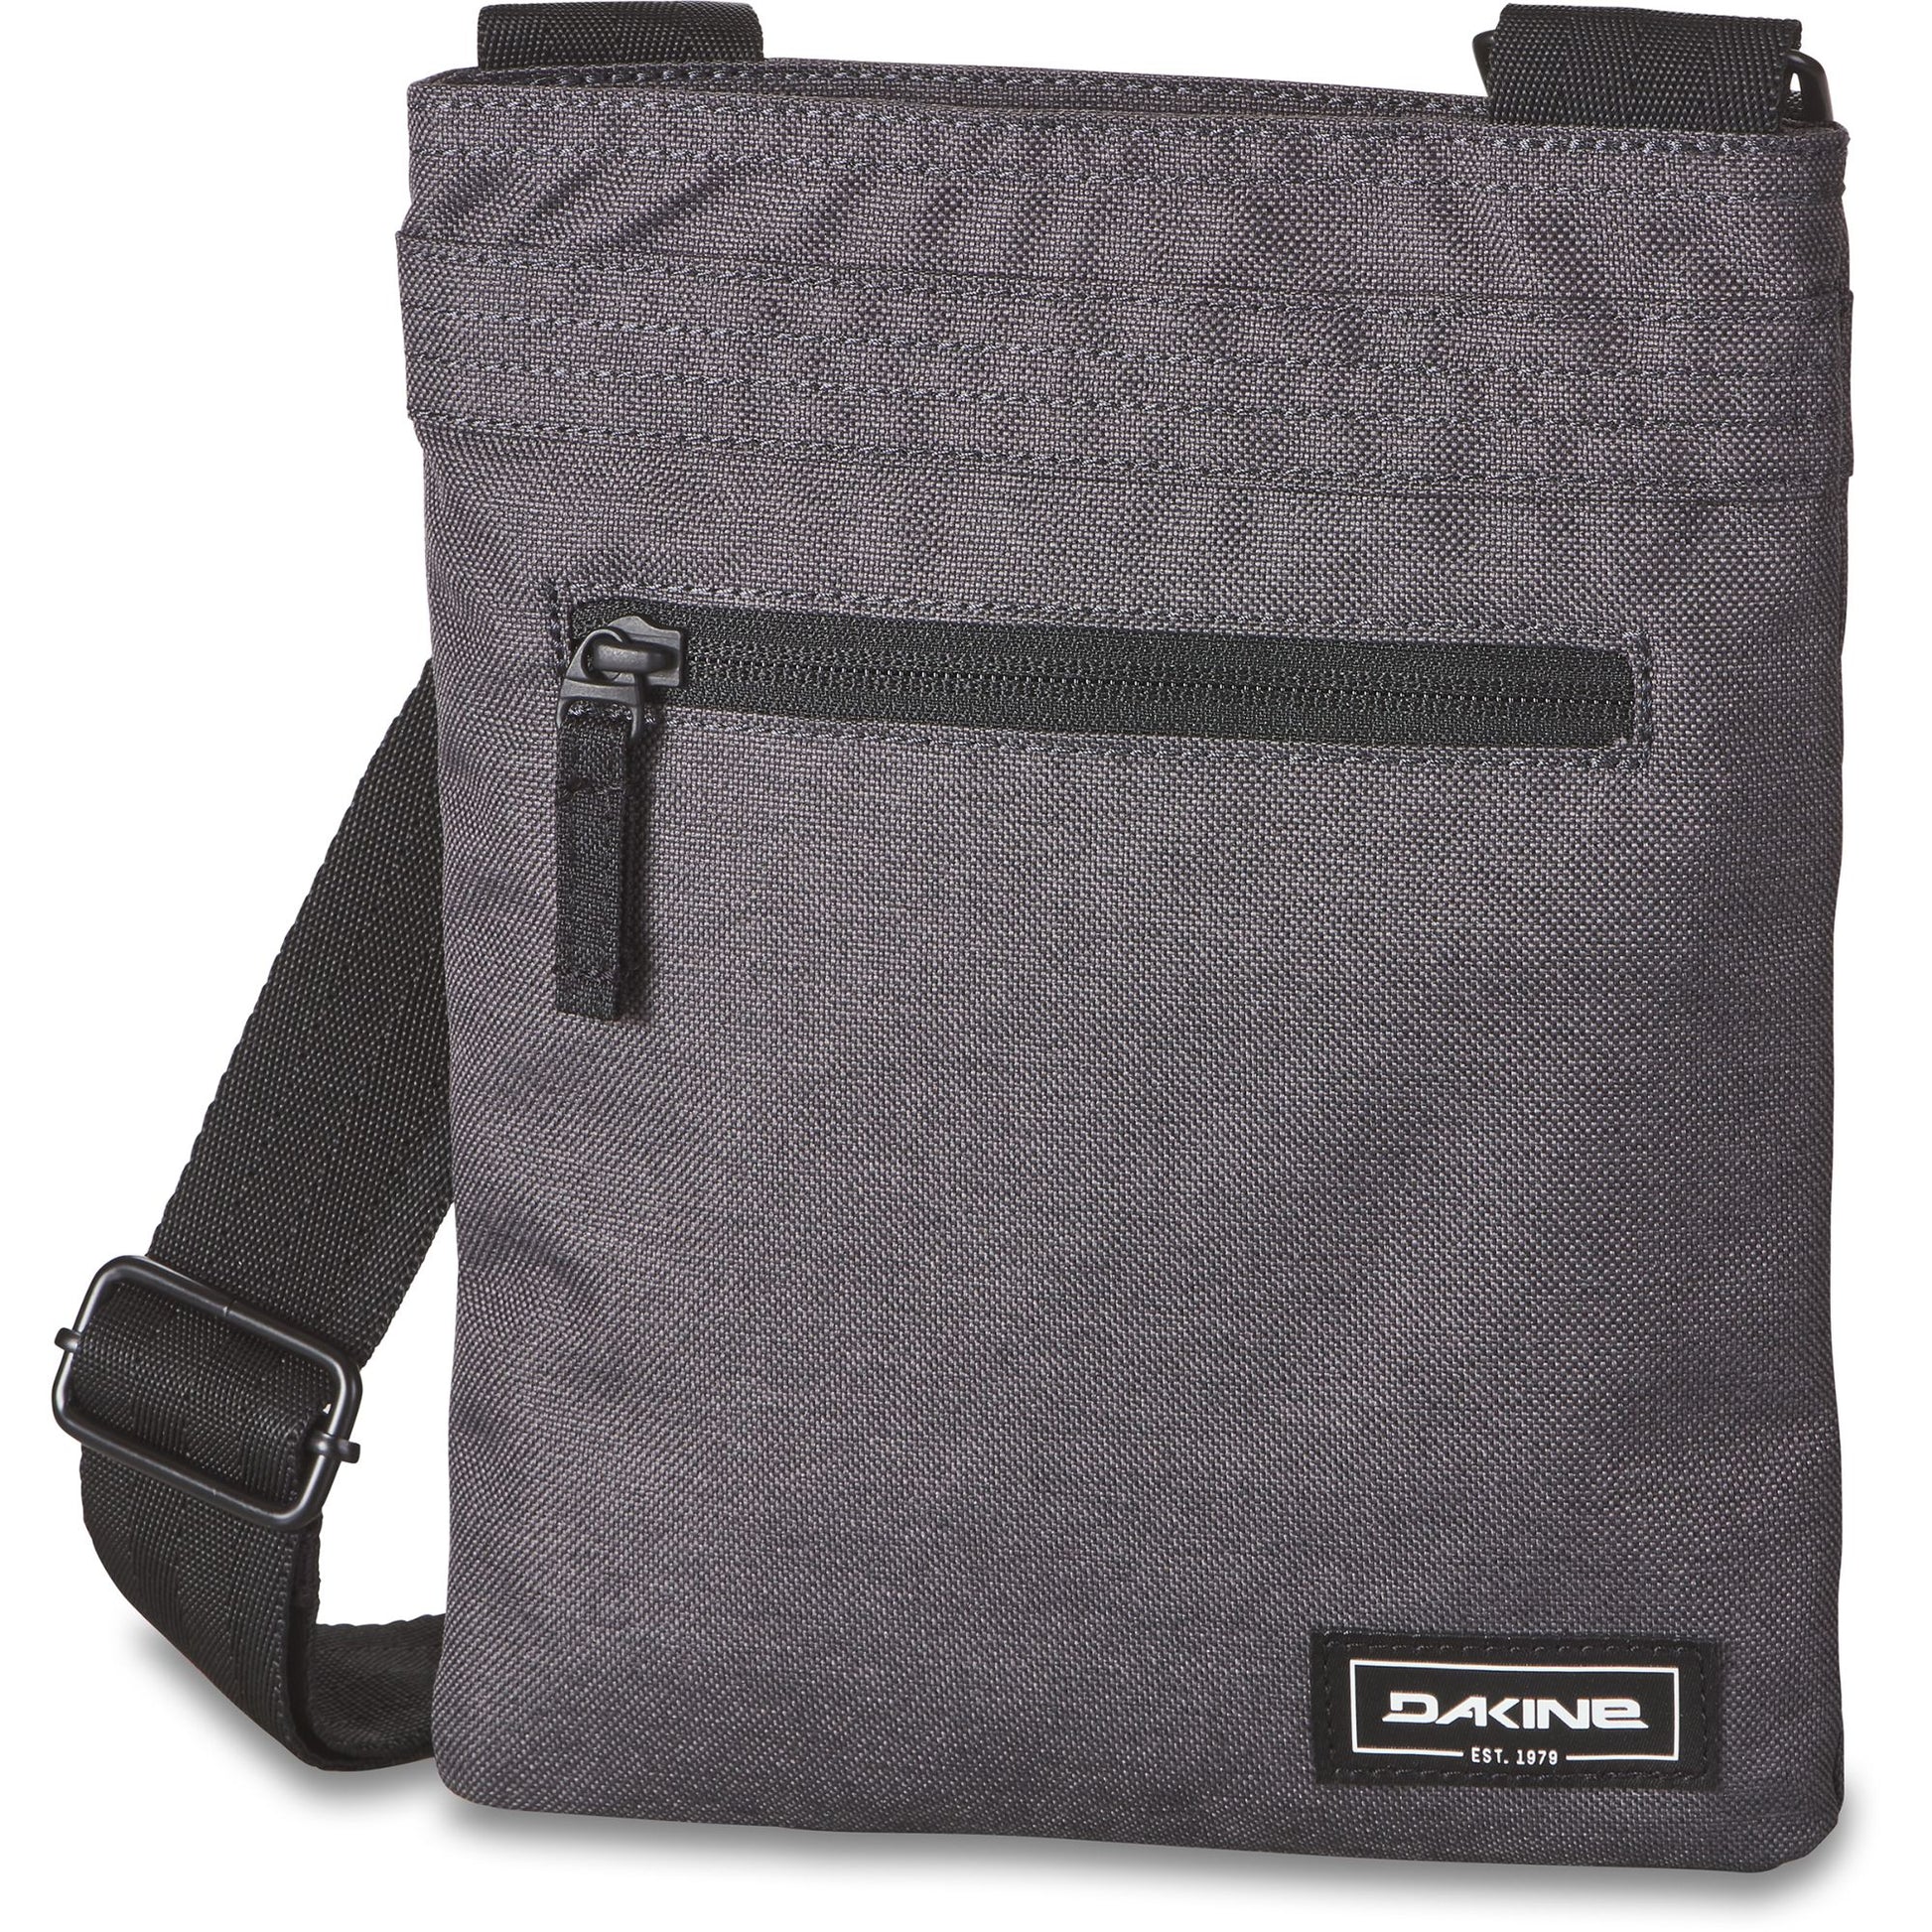 Dakine Jive Bag Geyser Grey OS Bags & Packs